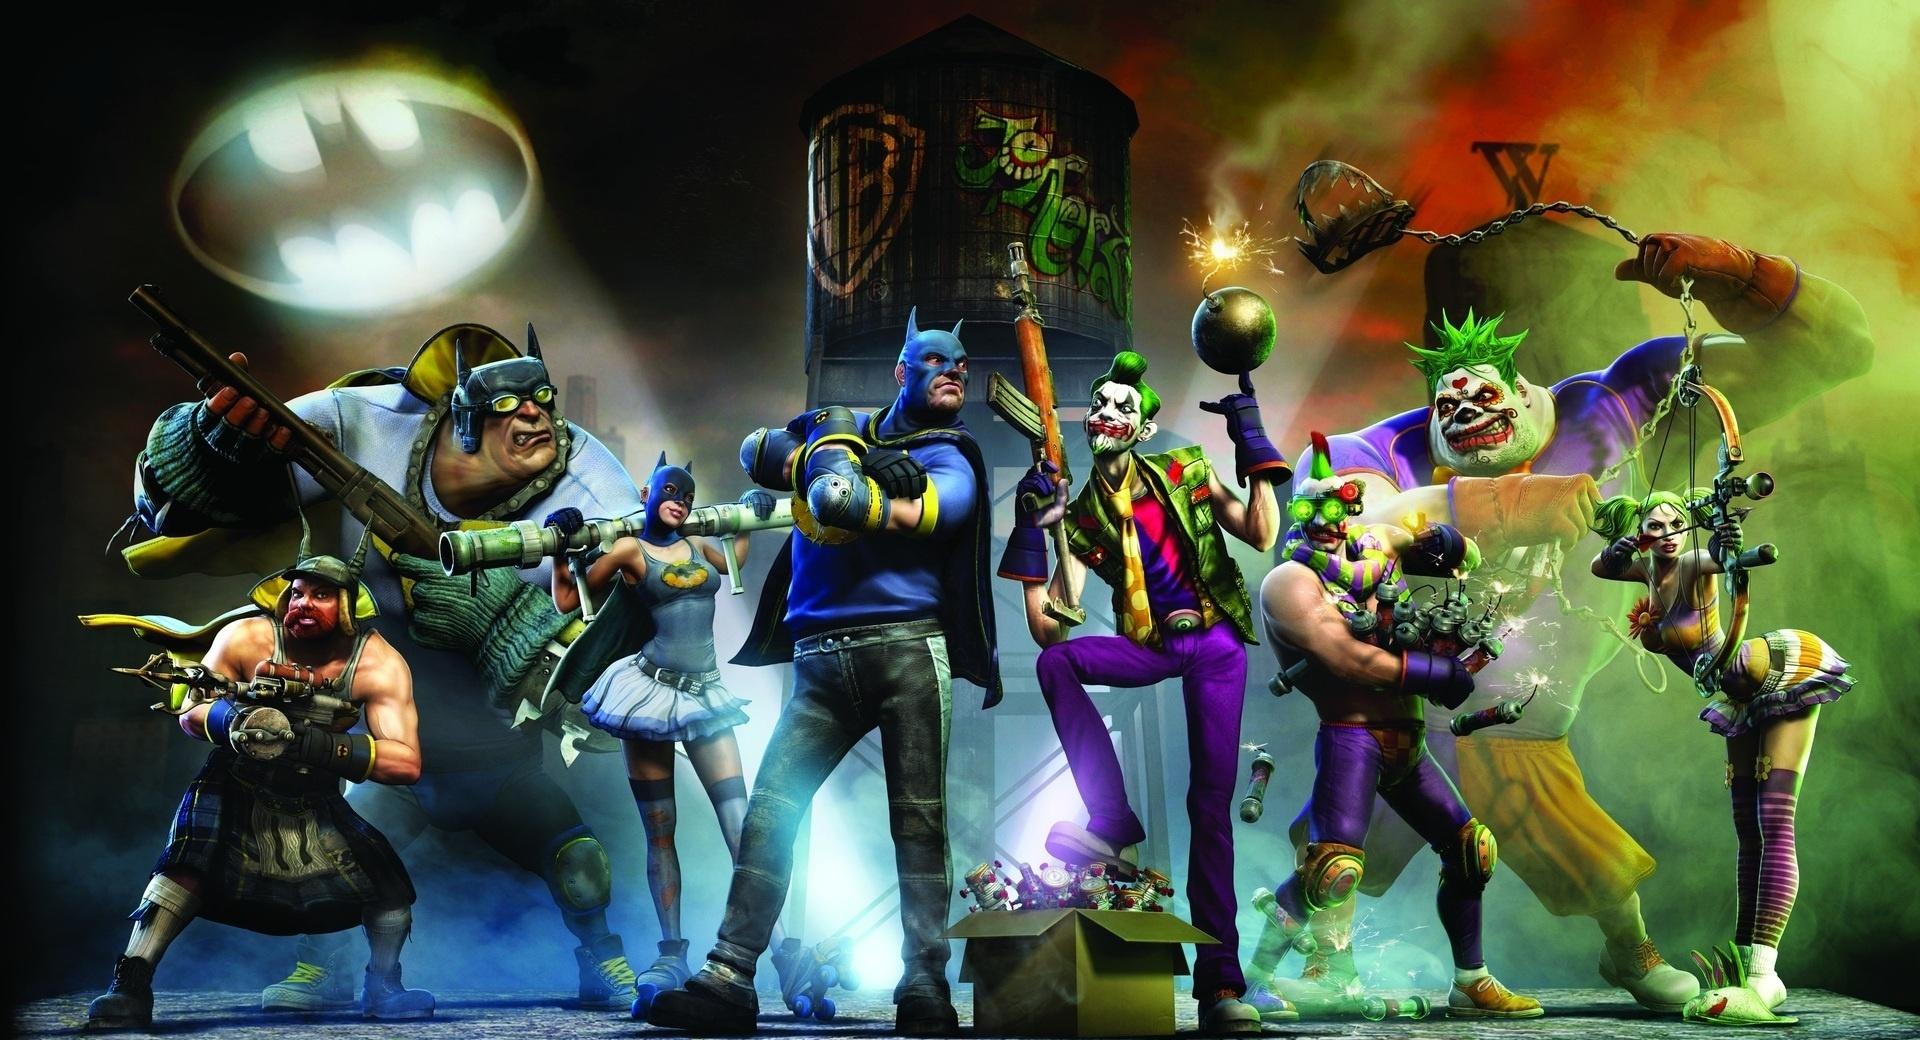 Joker Vs Batman at 1280 x 960 size wallpapers HD quality